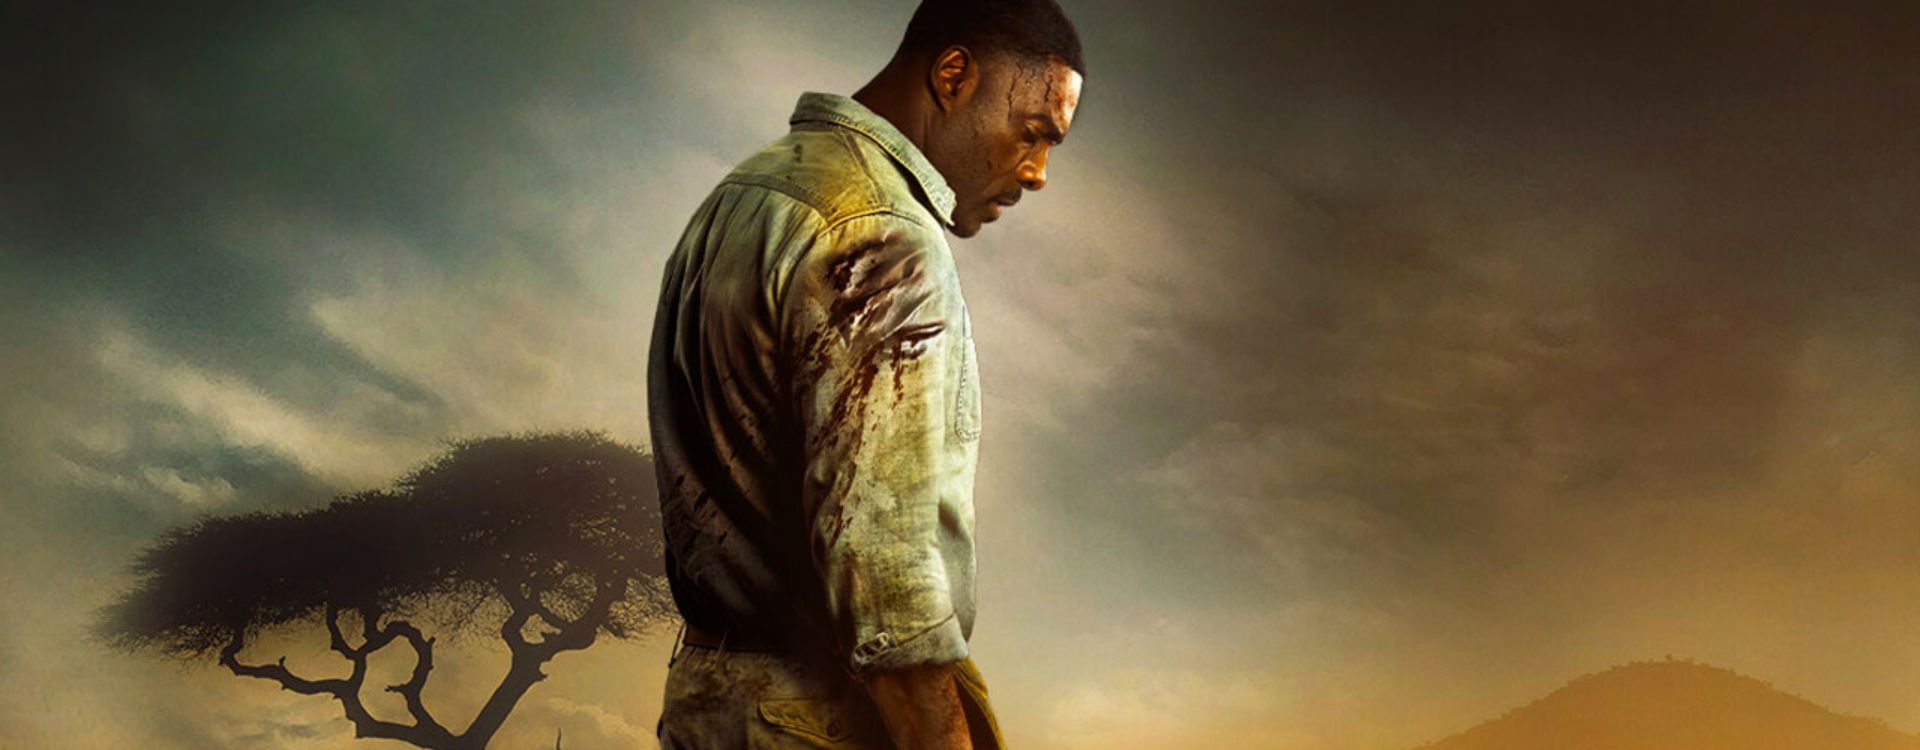 Recensione di Beast: thriller con Idris Elba